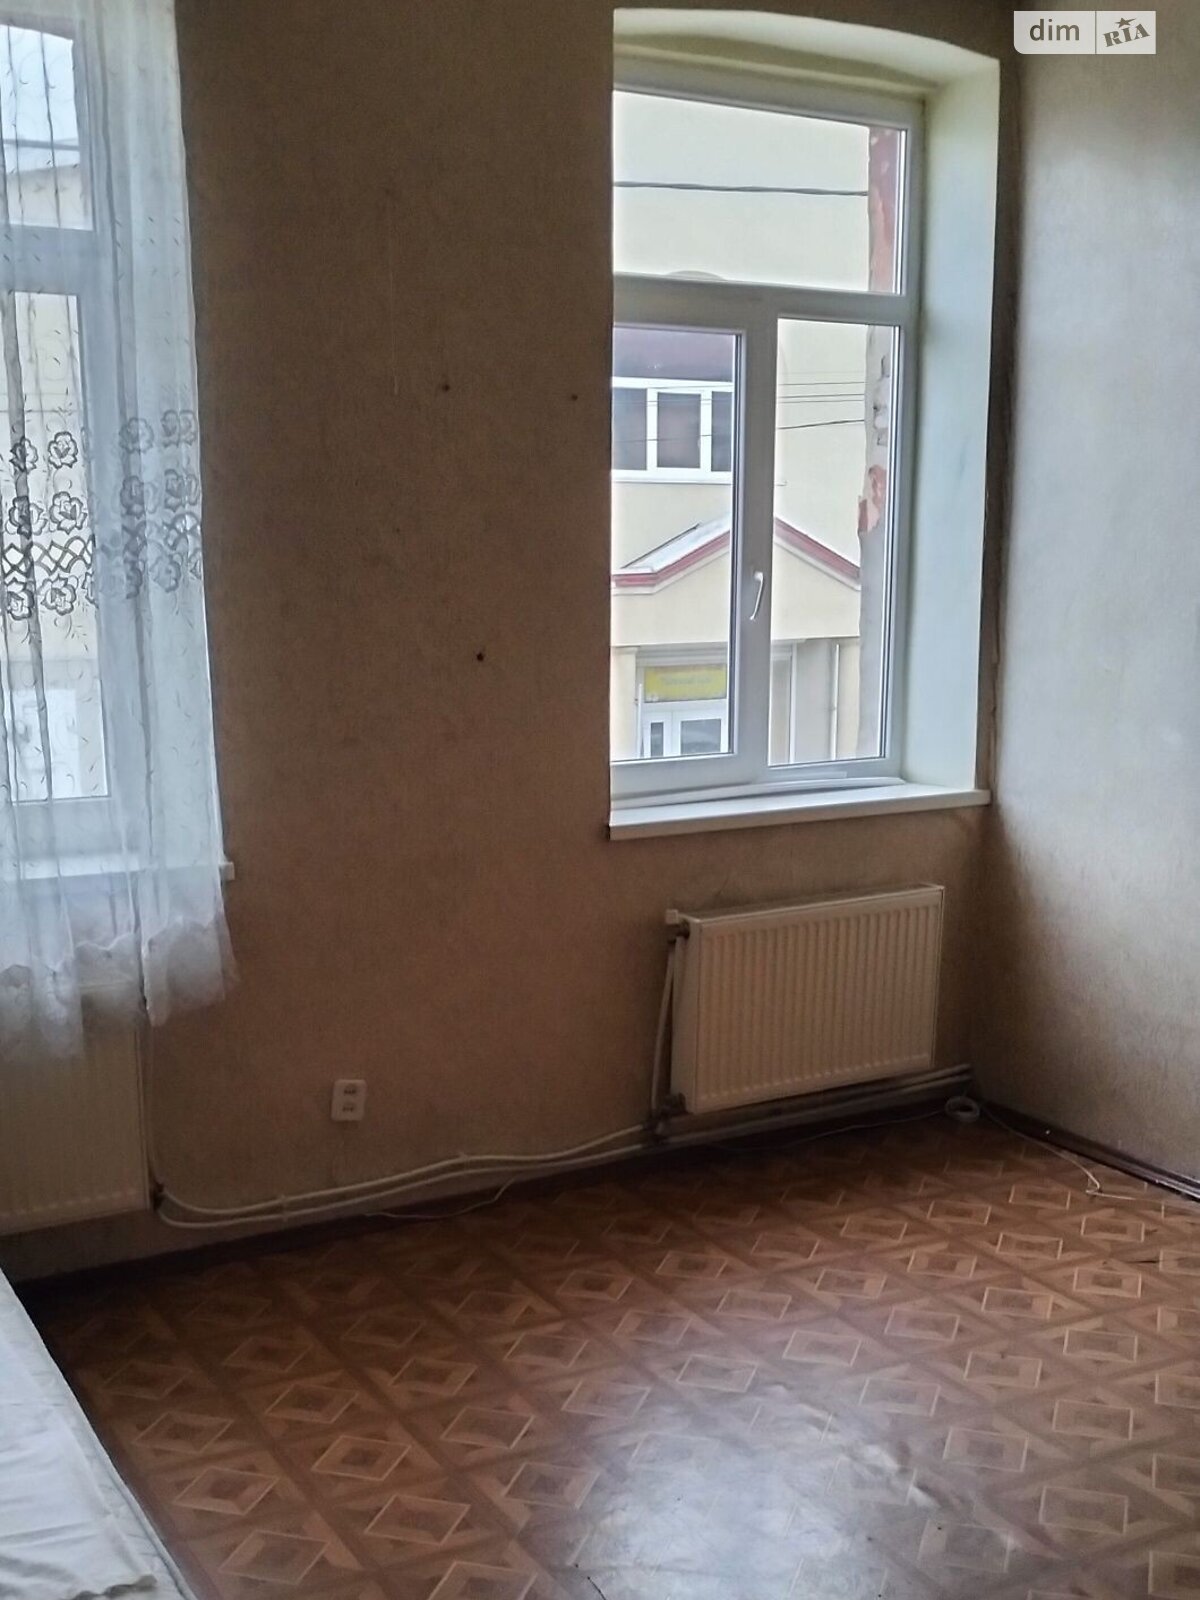 Продажа однокомнатной квартиры в Ровно, на ул. Замковая, район Центр фото 1